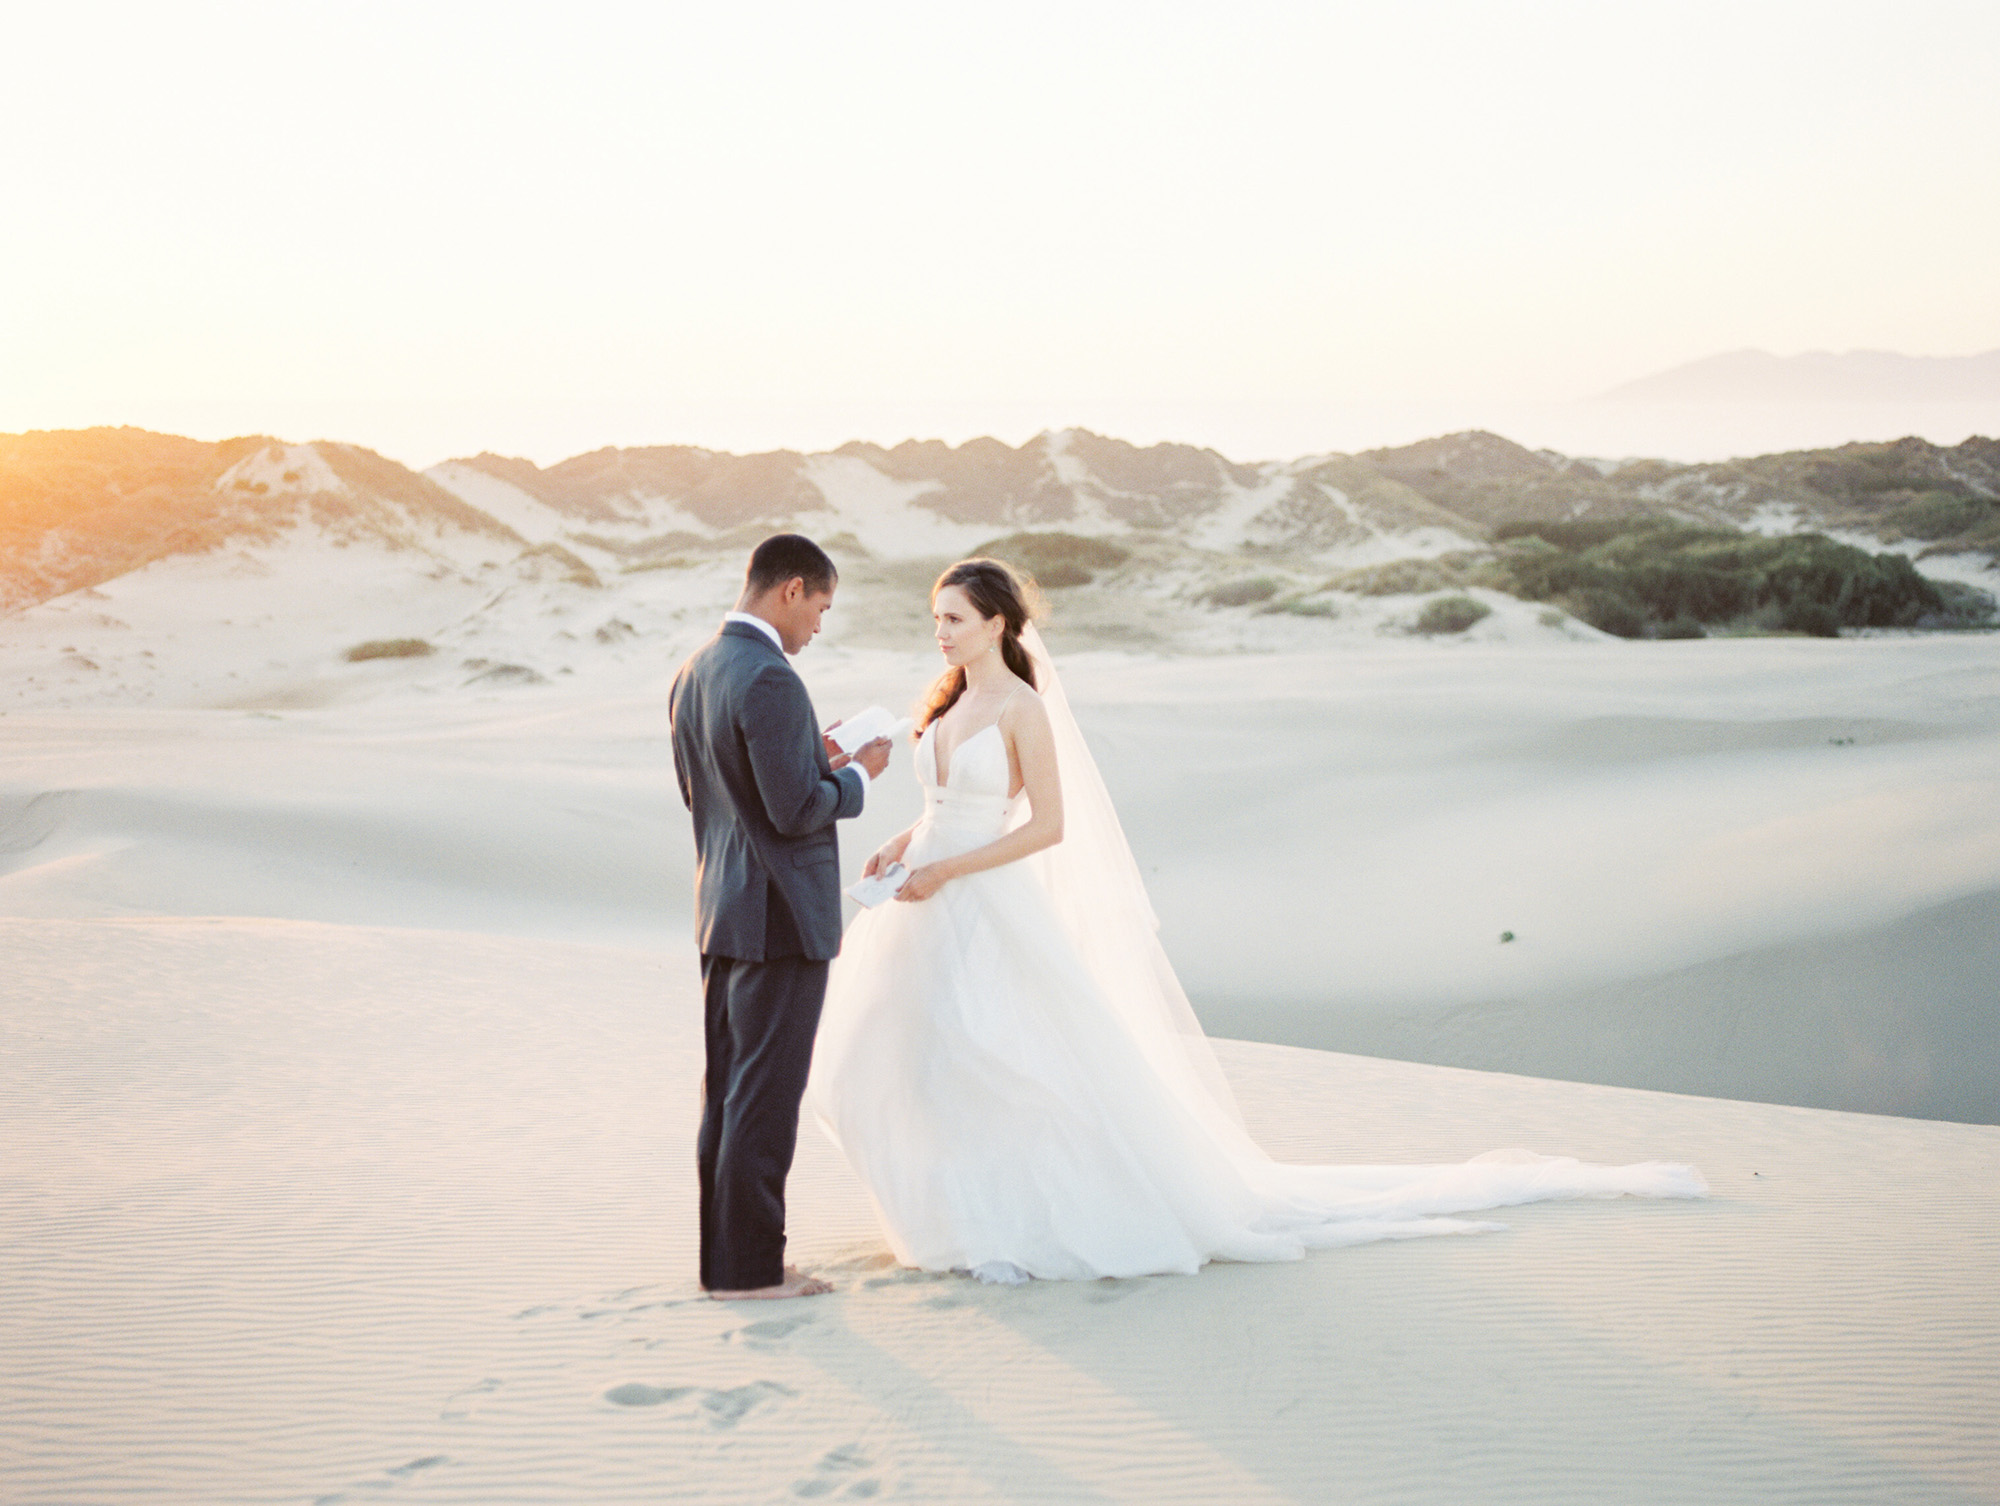 Santa Barbara elopement locations by California wedding photographer Tenth & Grace.